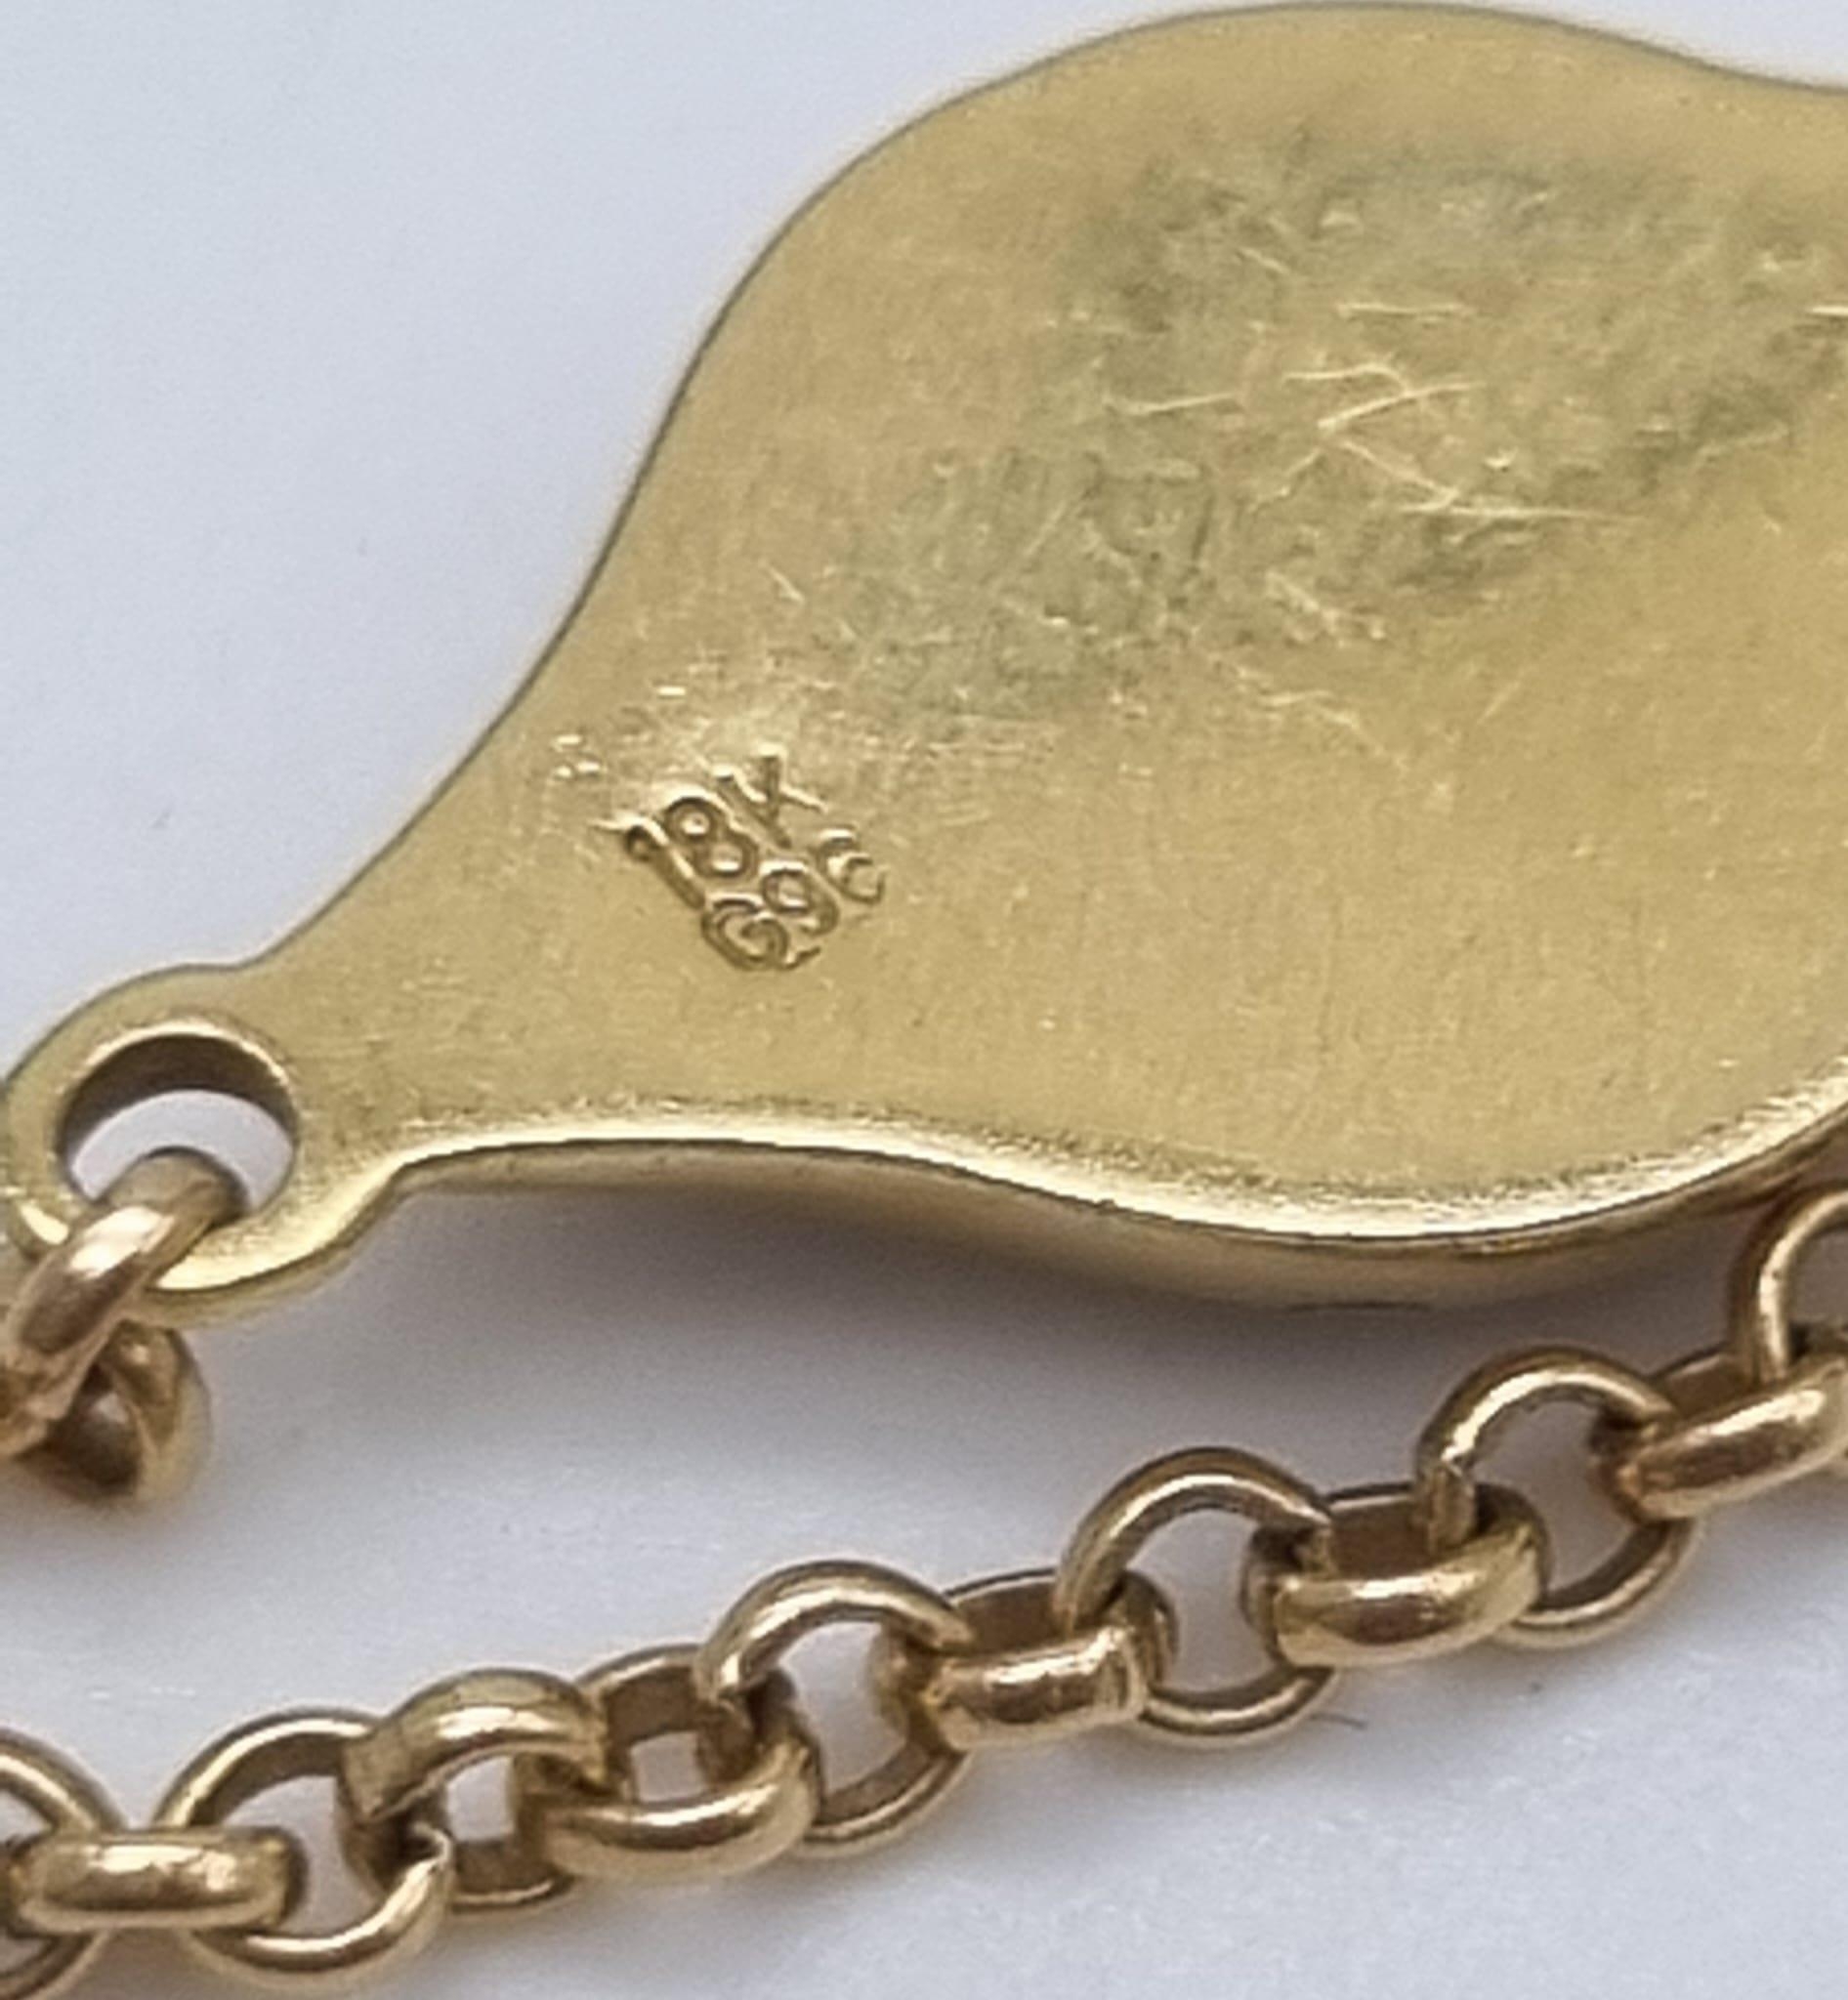 18k Yellow Gold Evil Eye Bracelet. Weighs 3.6g - Image 2 of 2